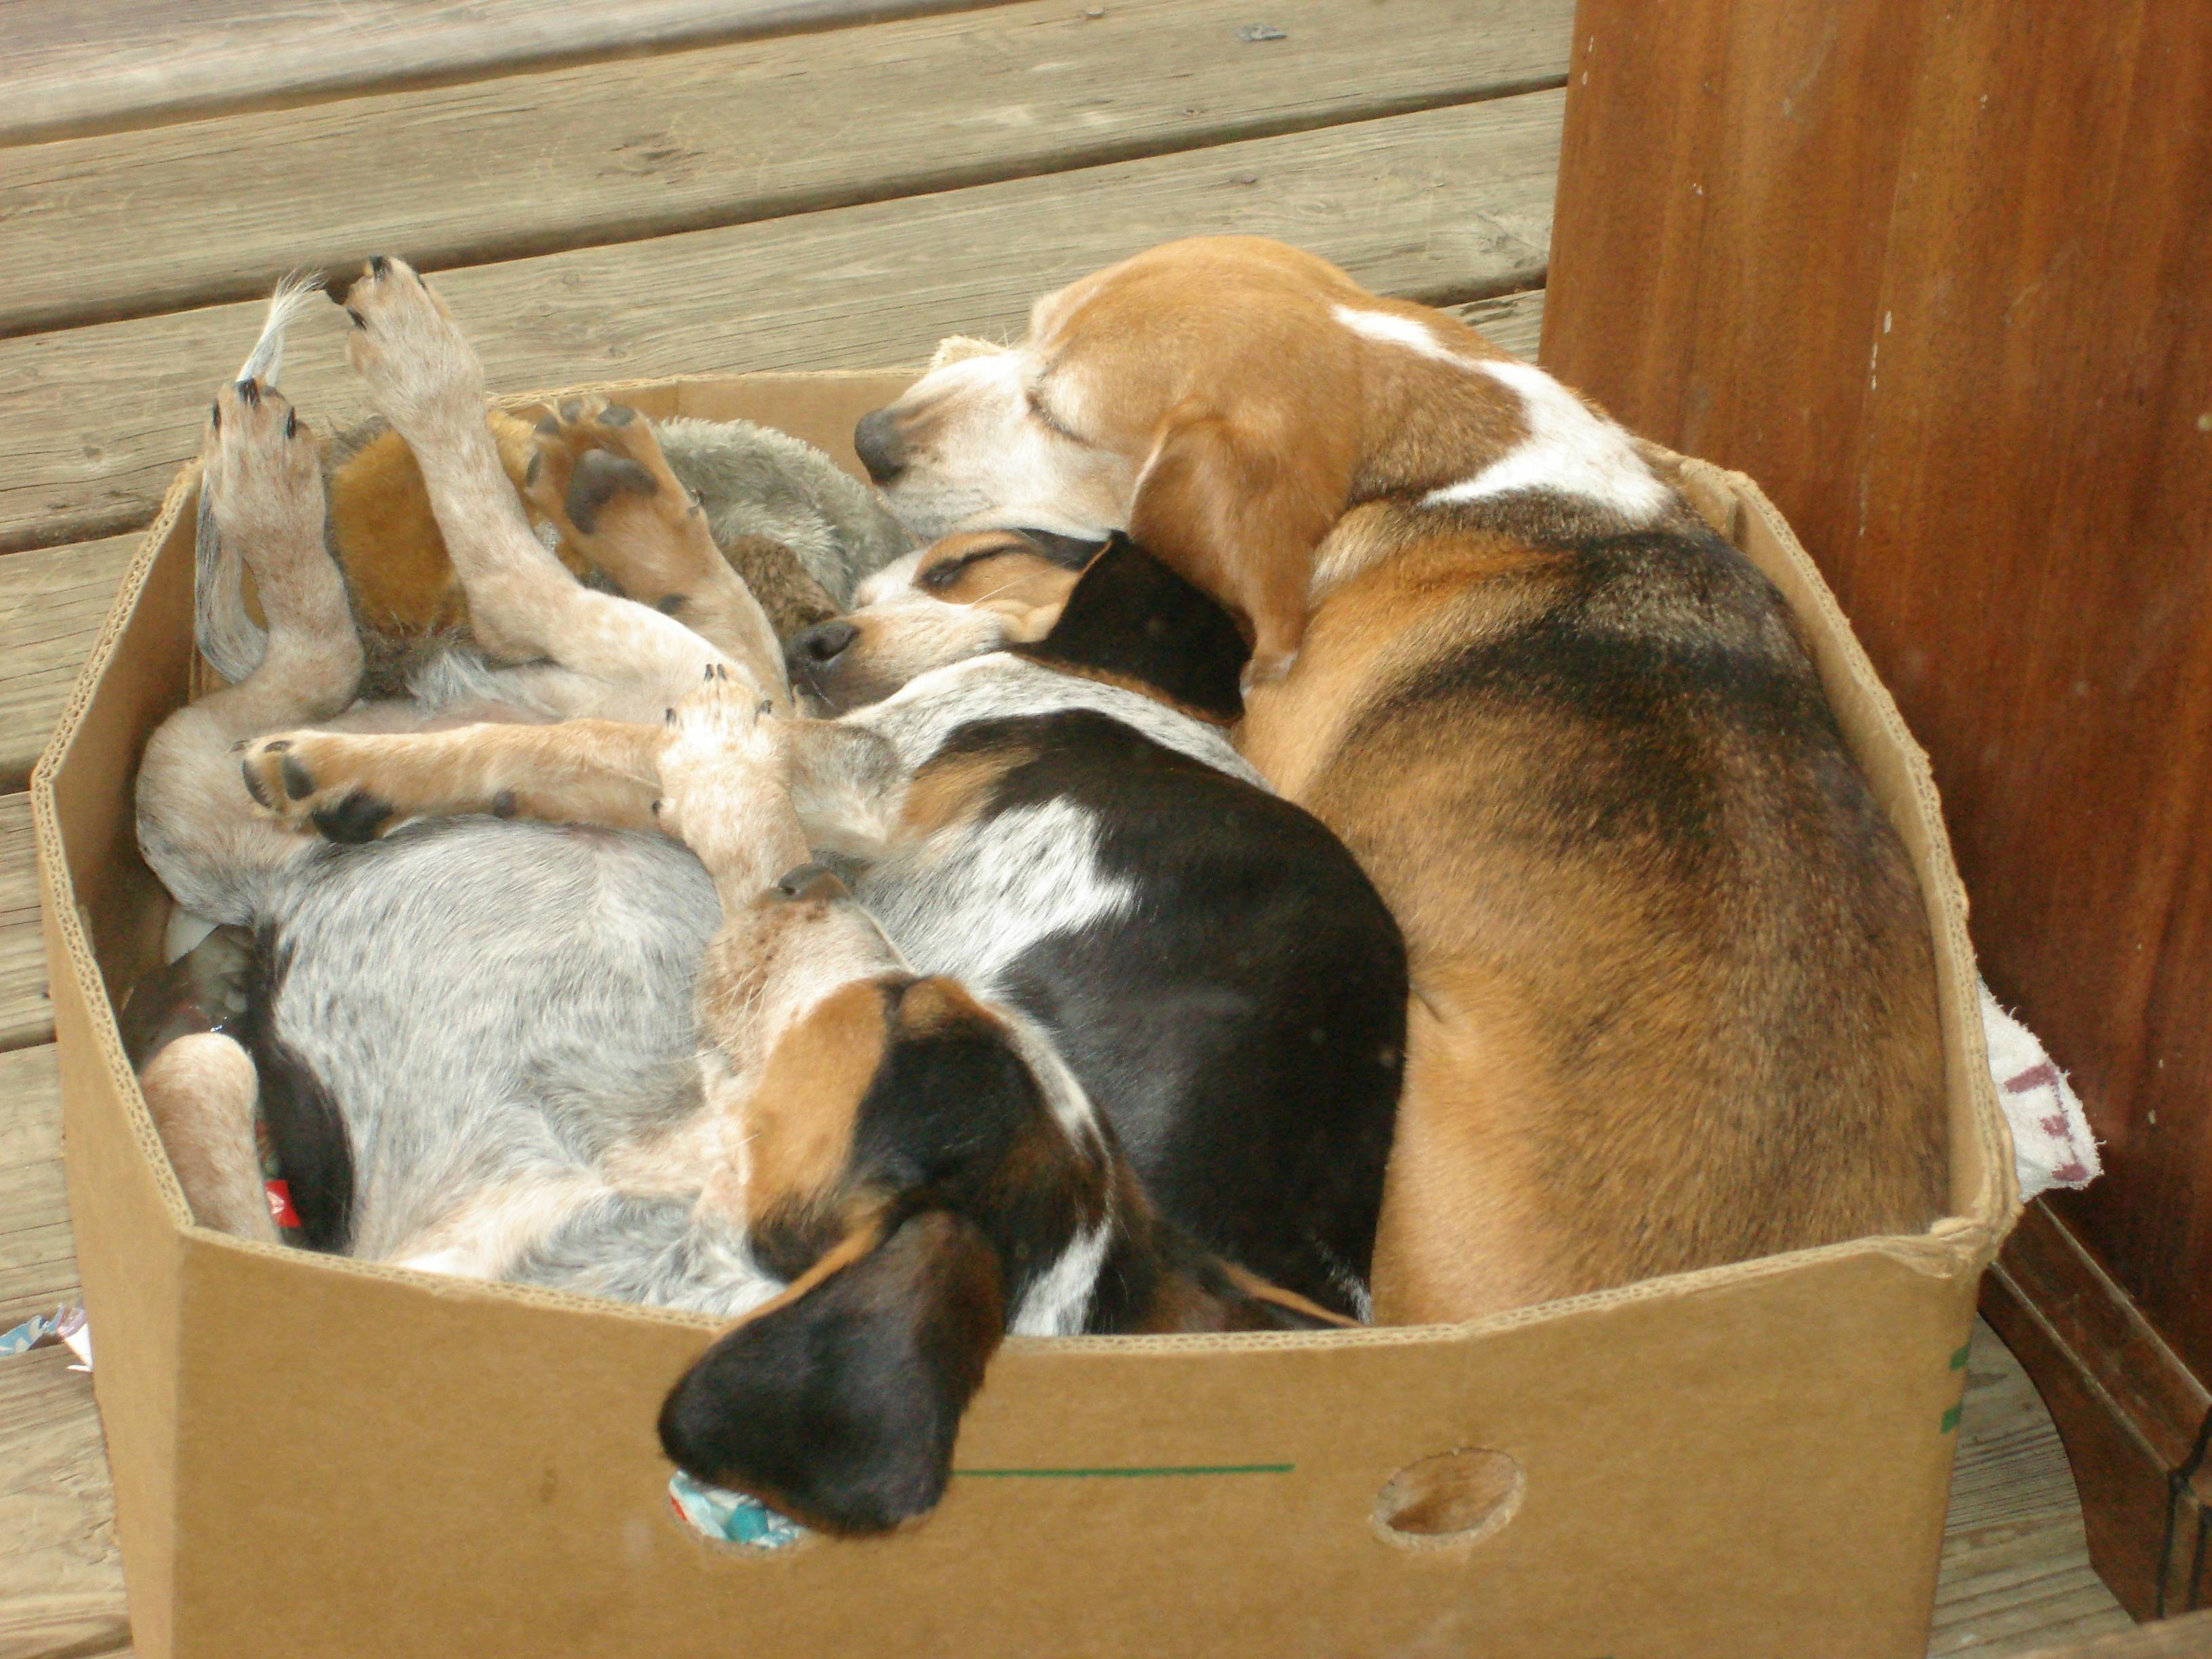 фото щенков в коробке